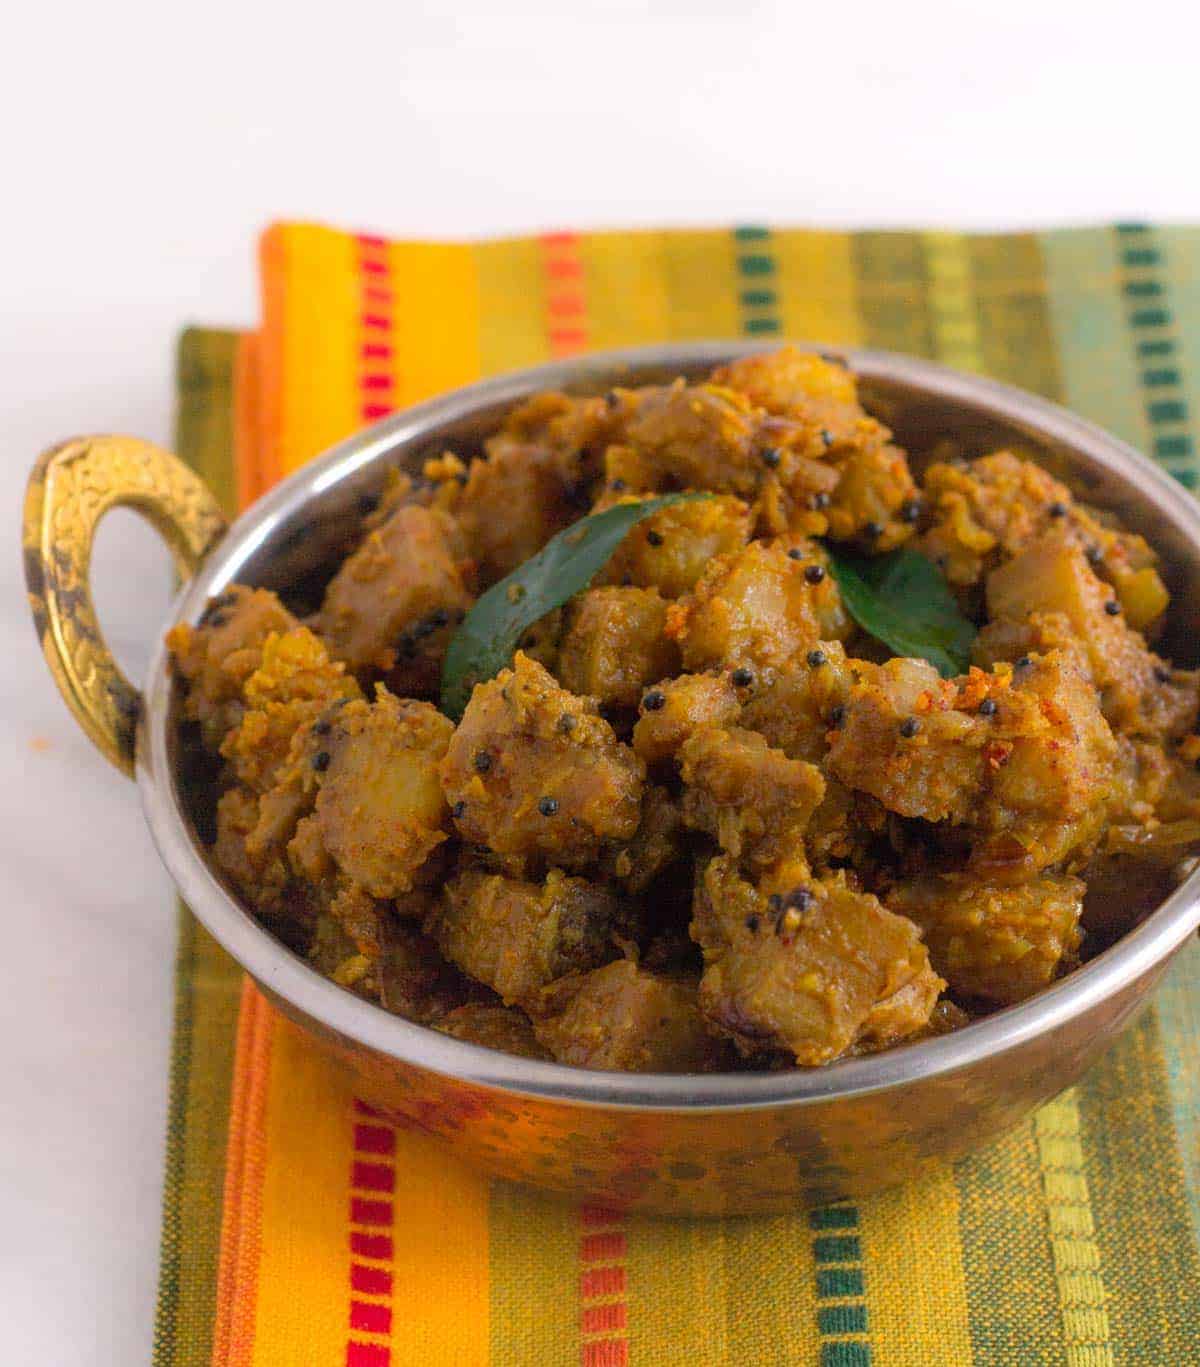 Kaccha kela sabzi served in a metal bowl garnished with curry leaves